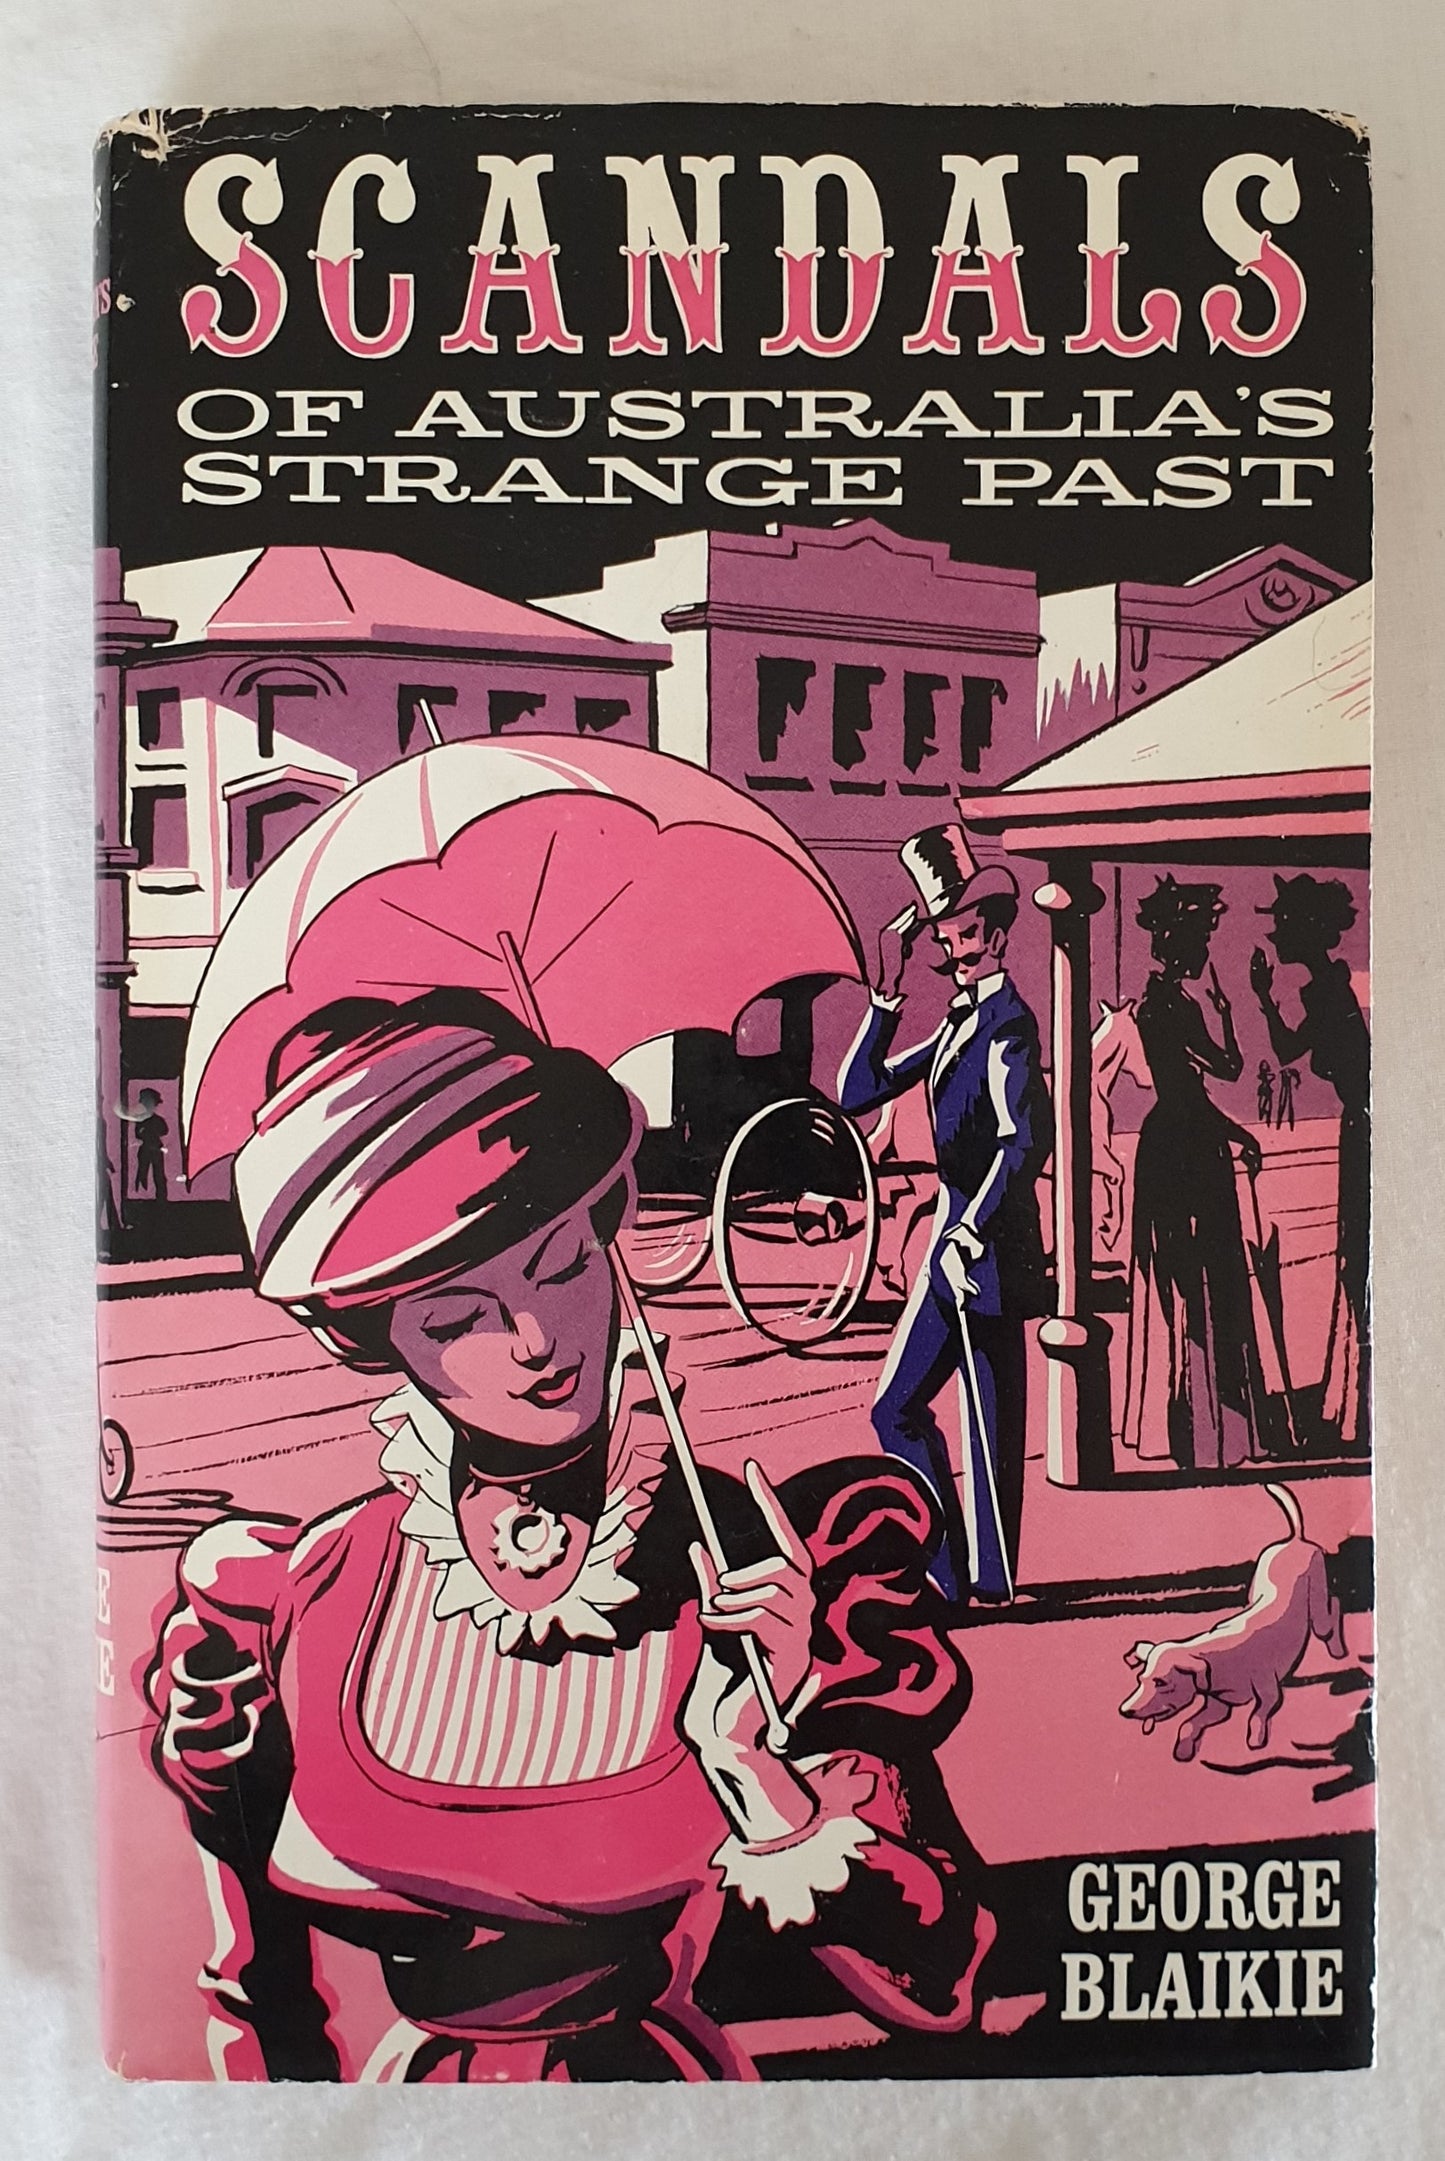 Scandals of Australia's Strange Past by George Blaikie